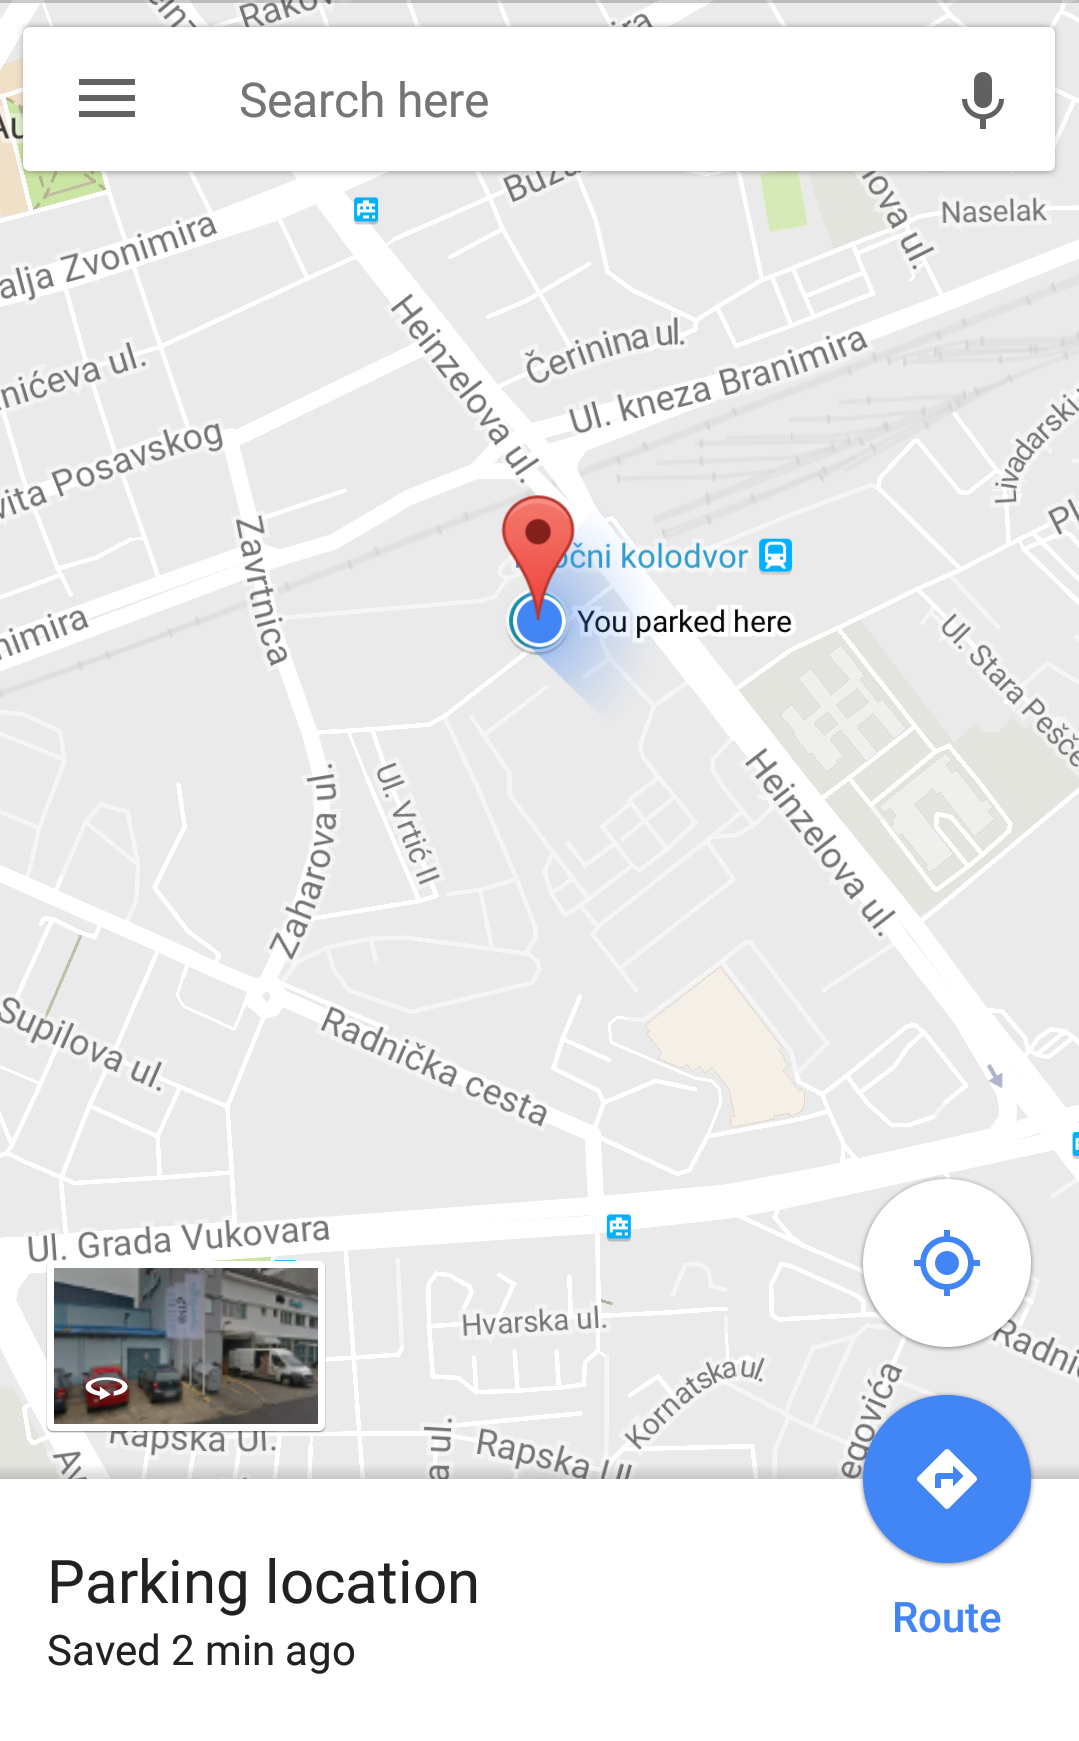 Google Maps pamti gdje ste se parkirali